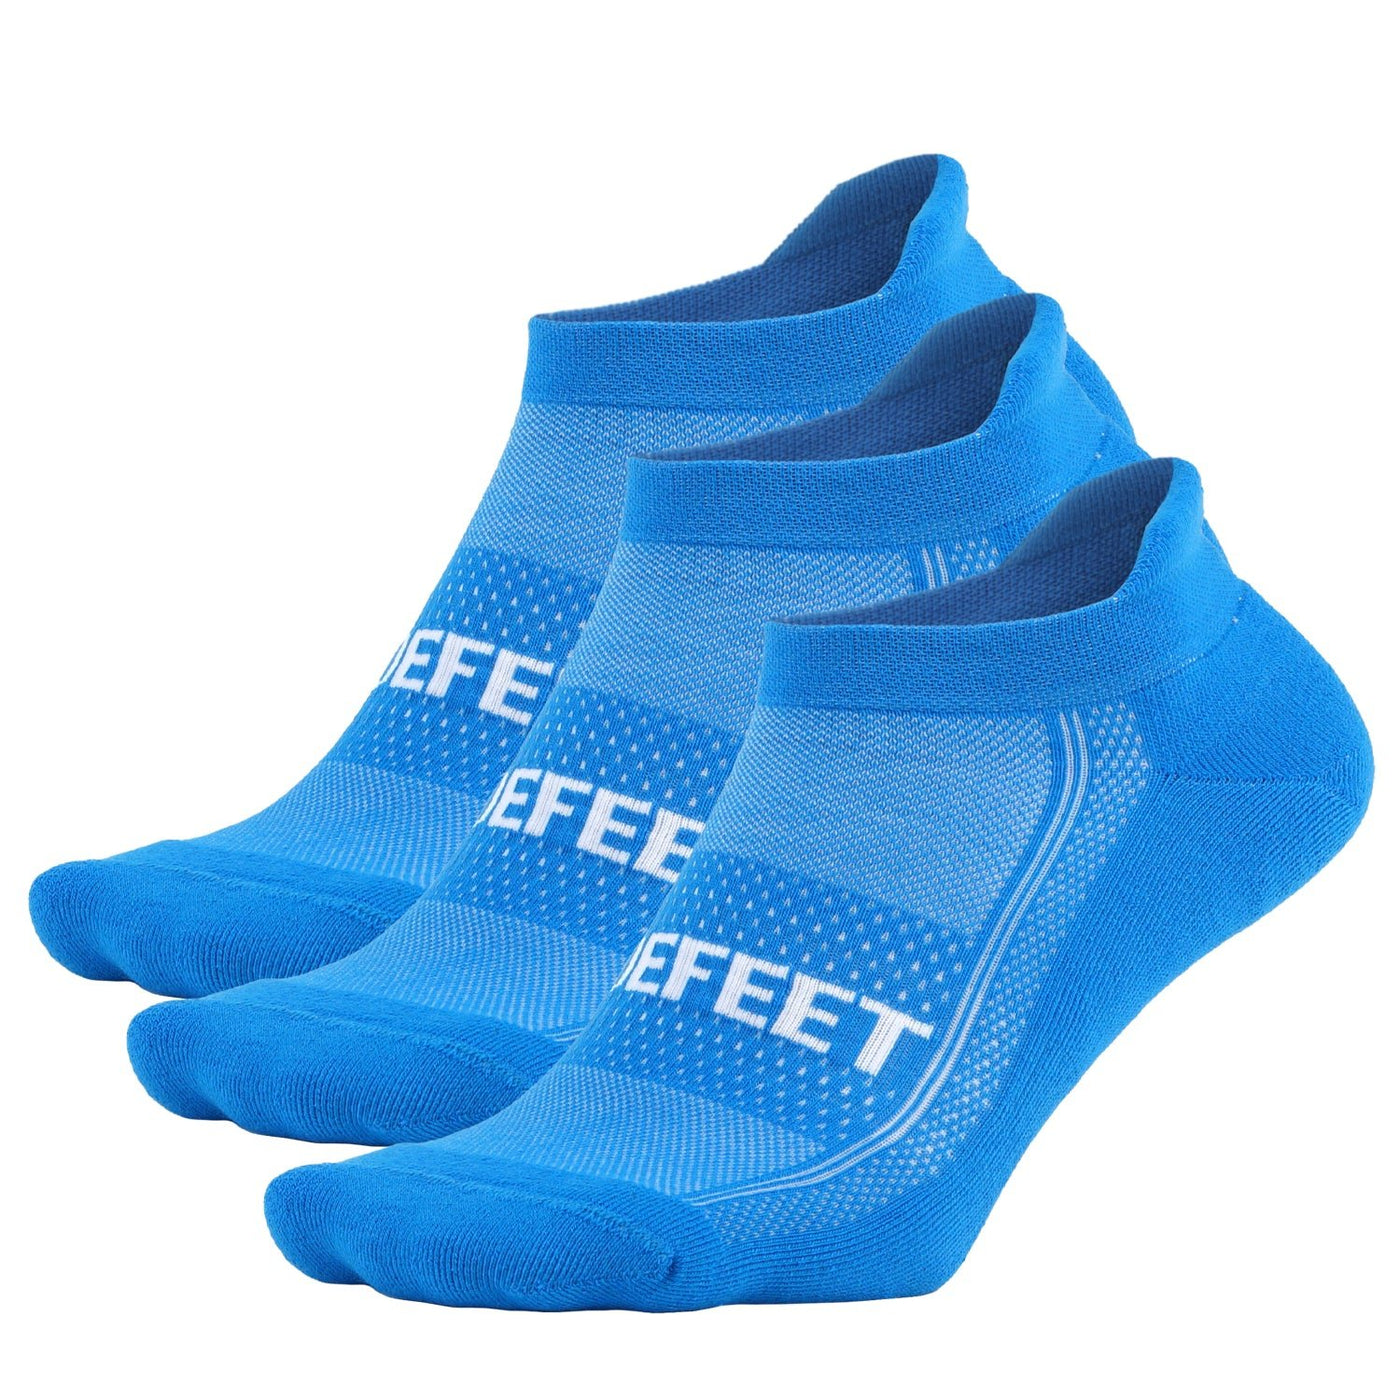 Speede Pro Tab Sport Socks Bundle: 3 Pairs - DeFeet